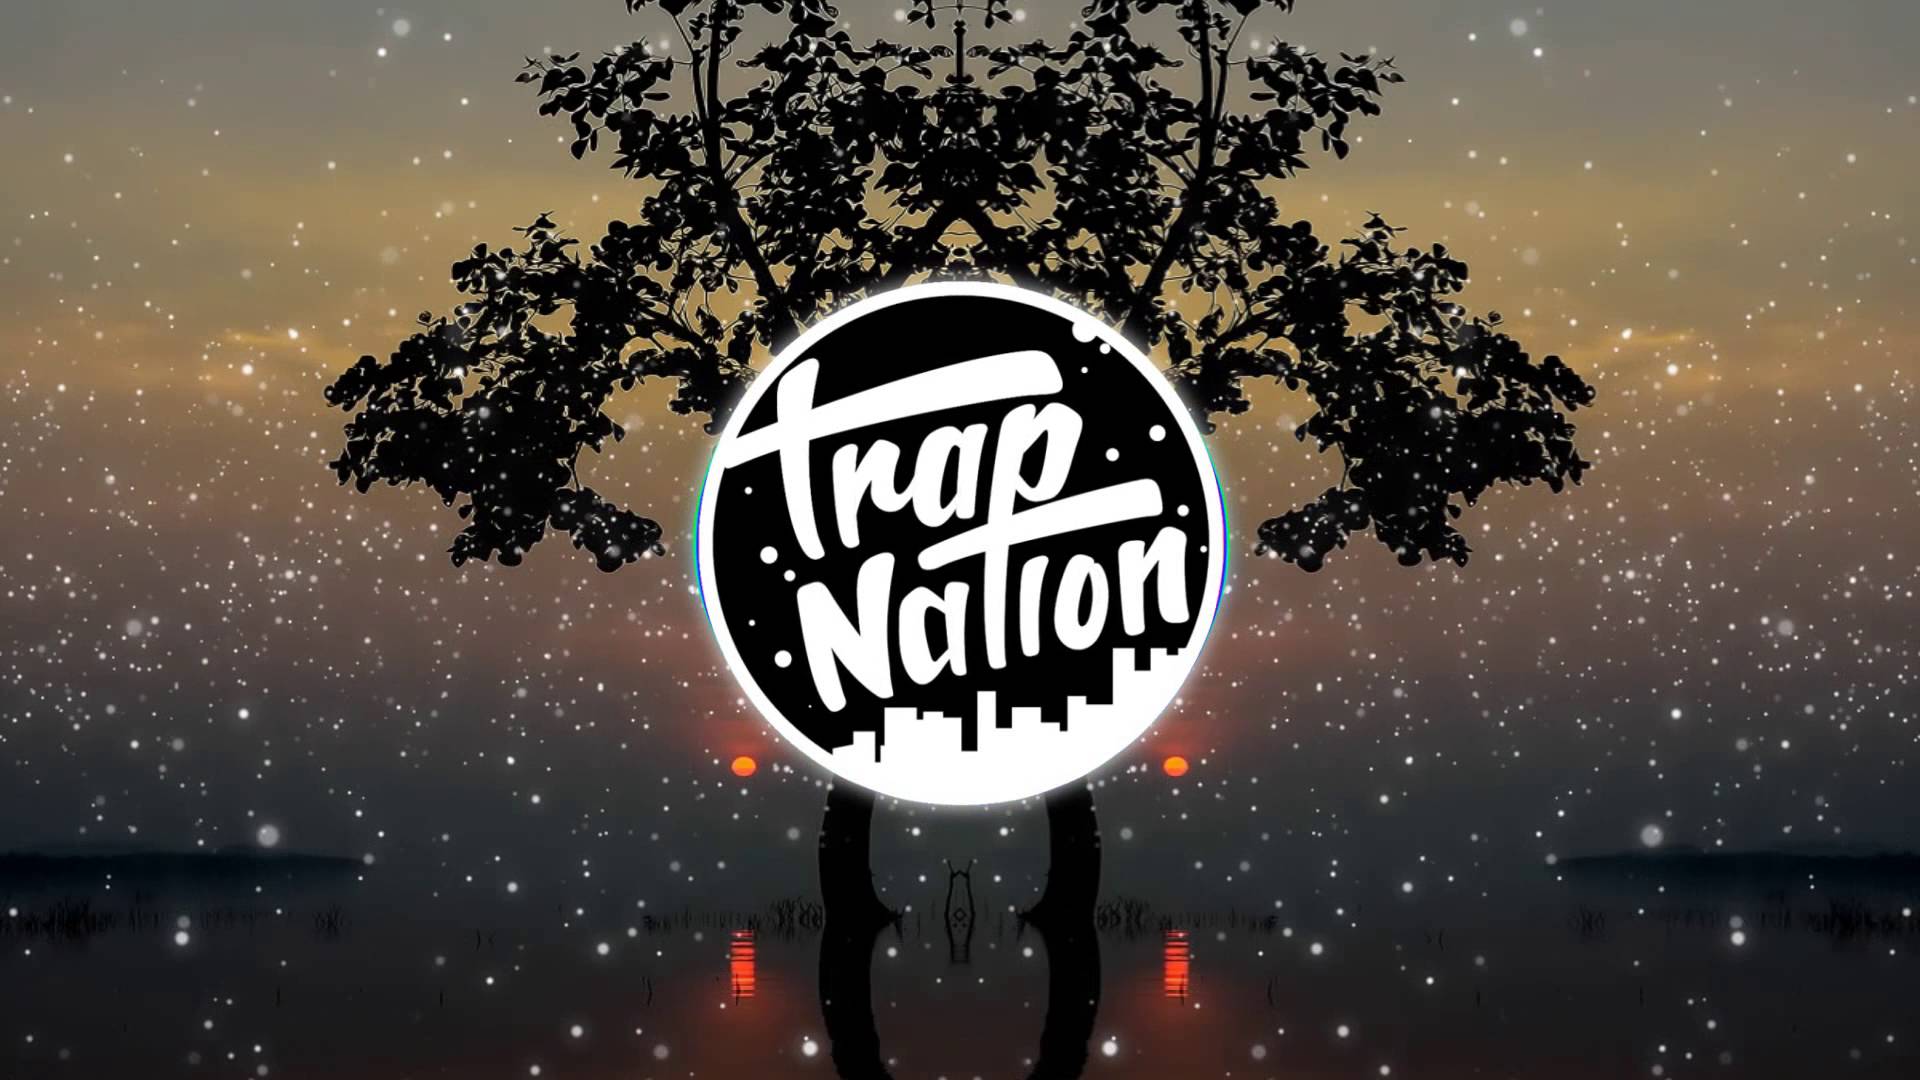 Trap Nation Wallpaper - HD Wallpaper 